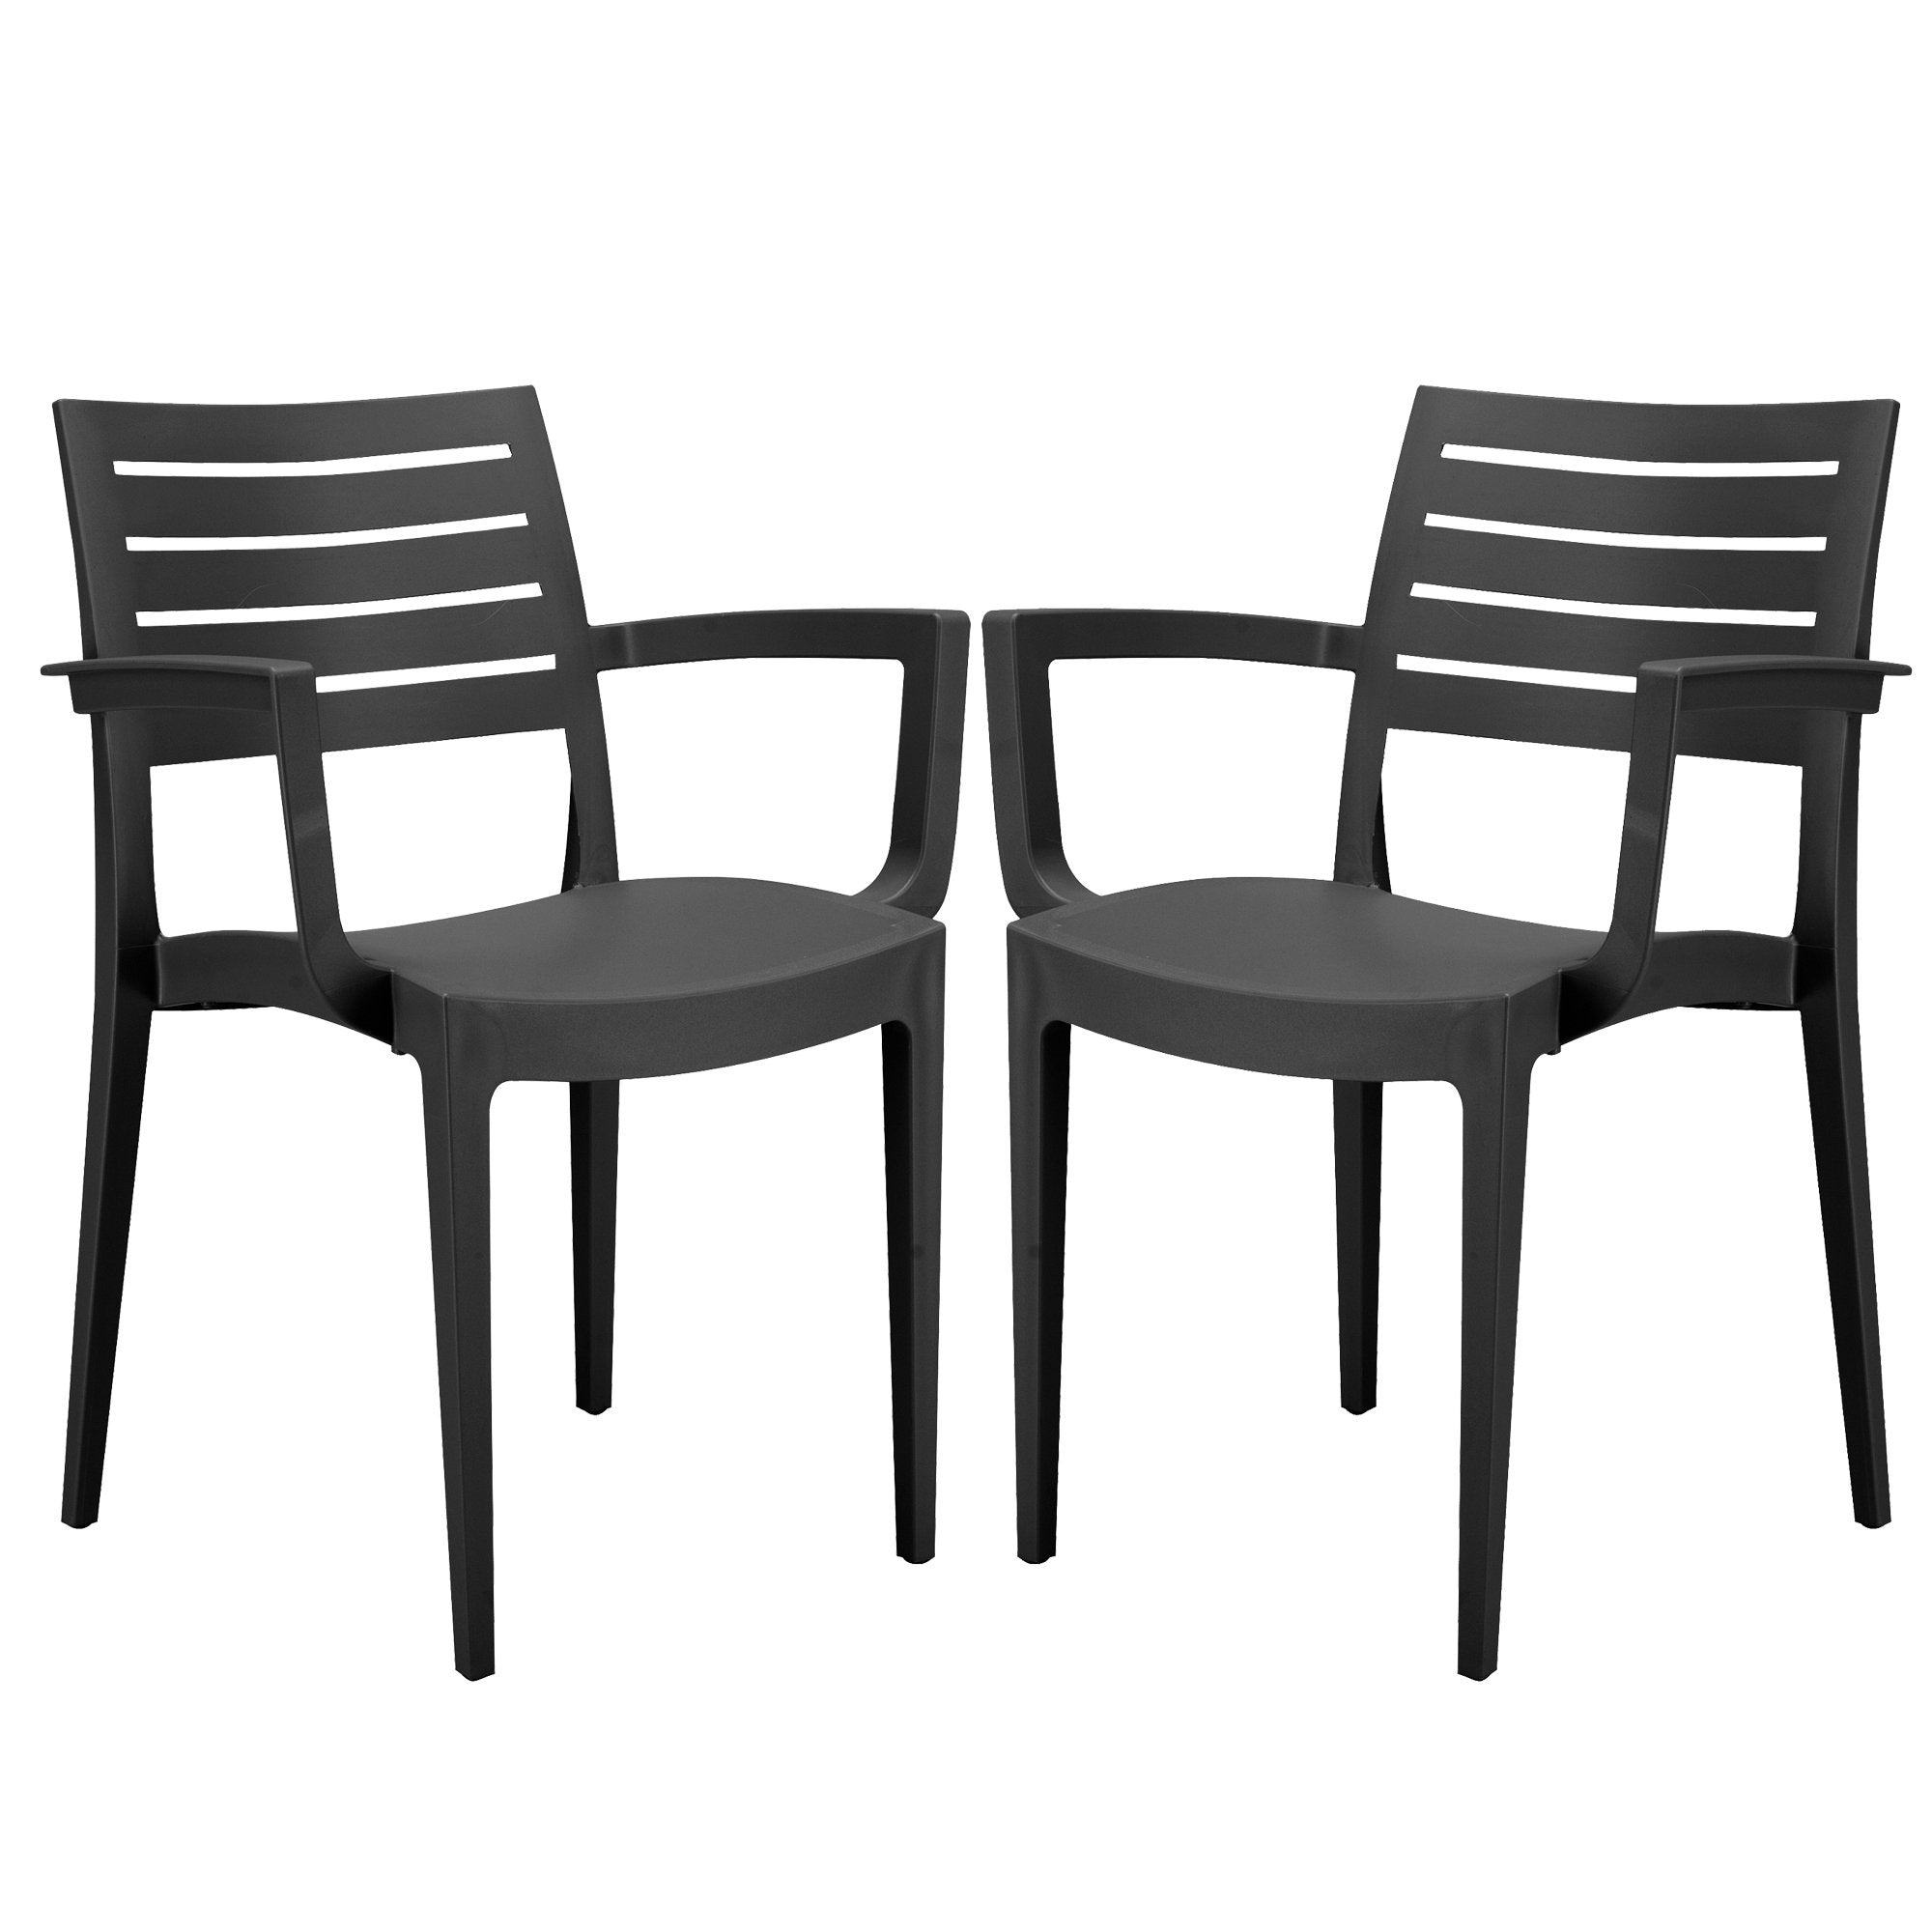 grandsoleil-set-2-sedie-braccioli-firenze-polipropilene-antracite